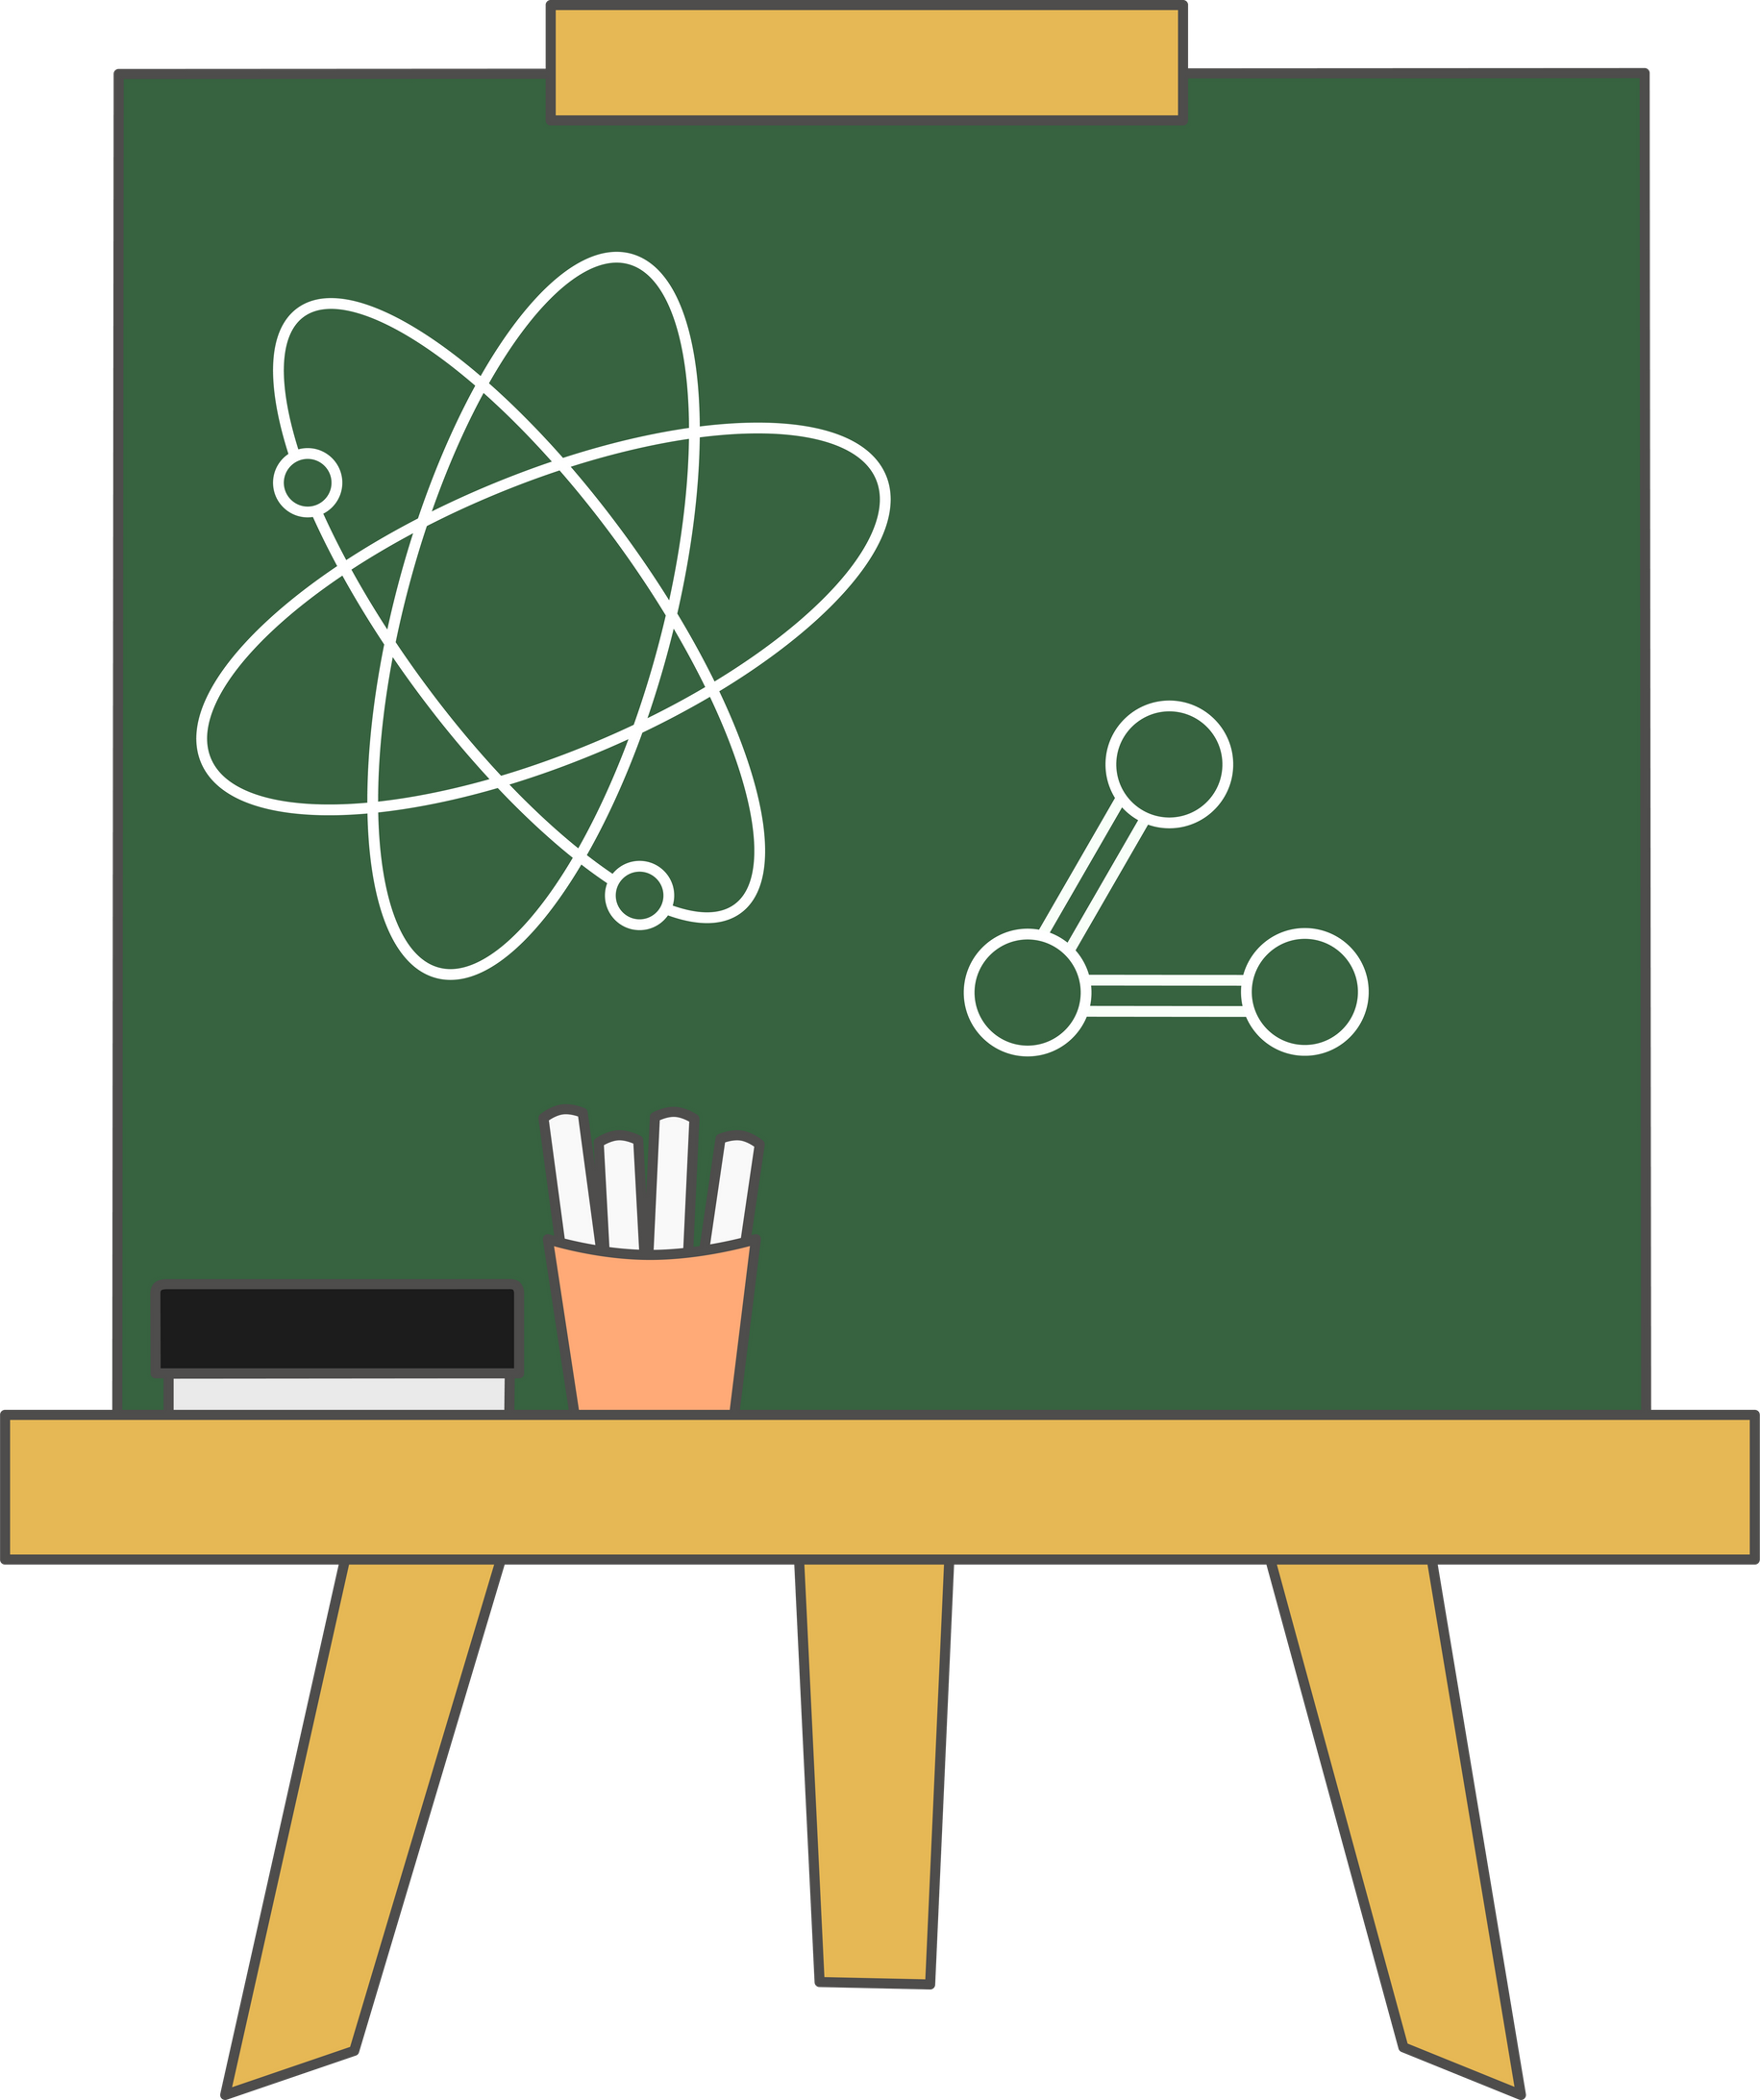 Green board for Teaching Illustration